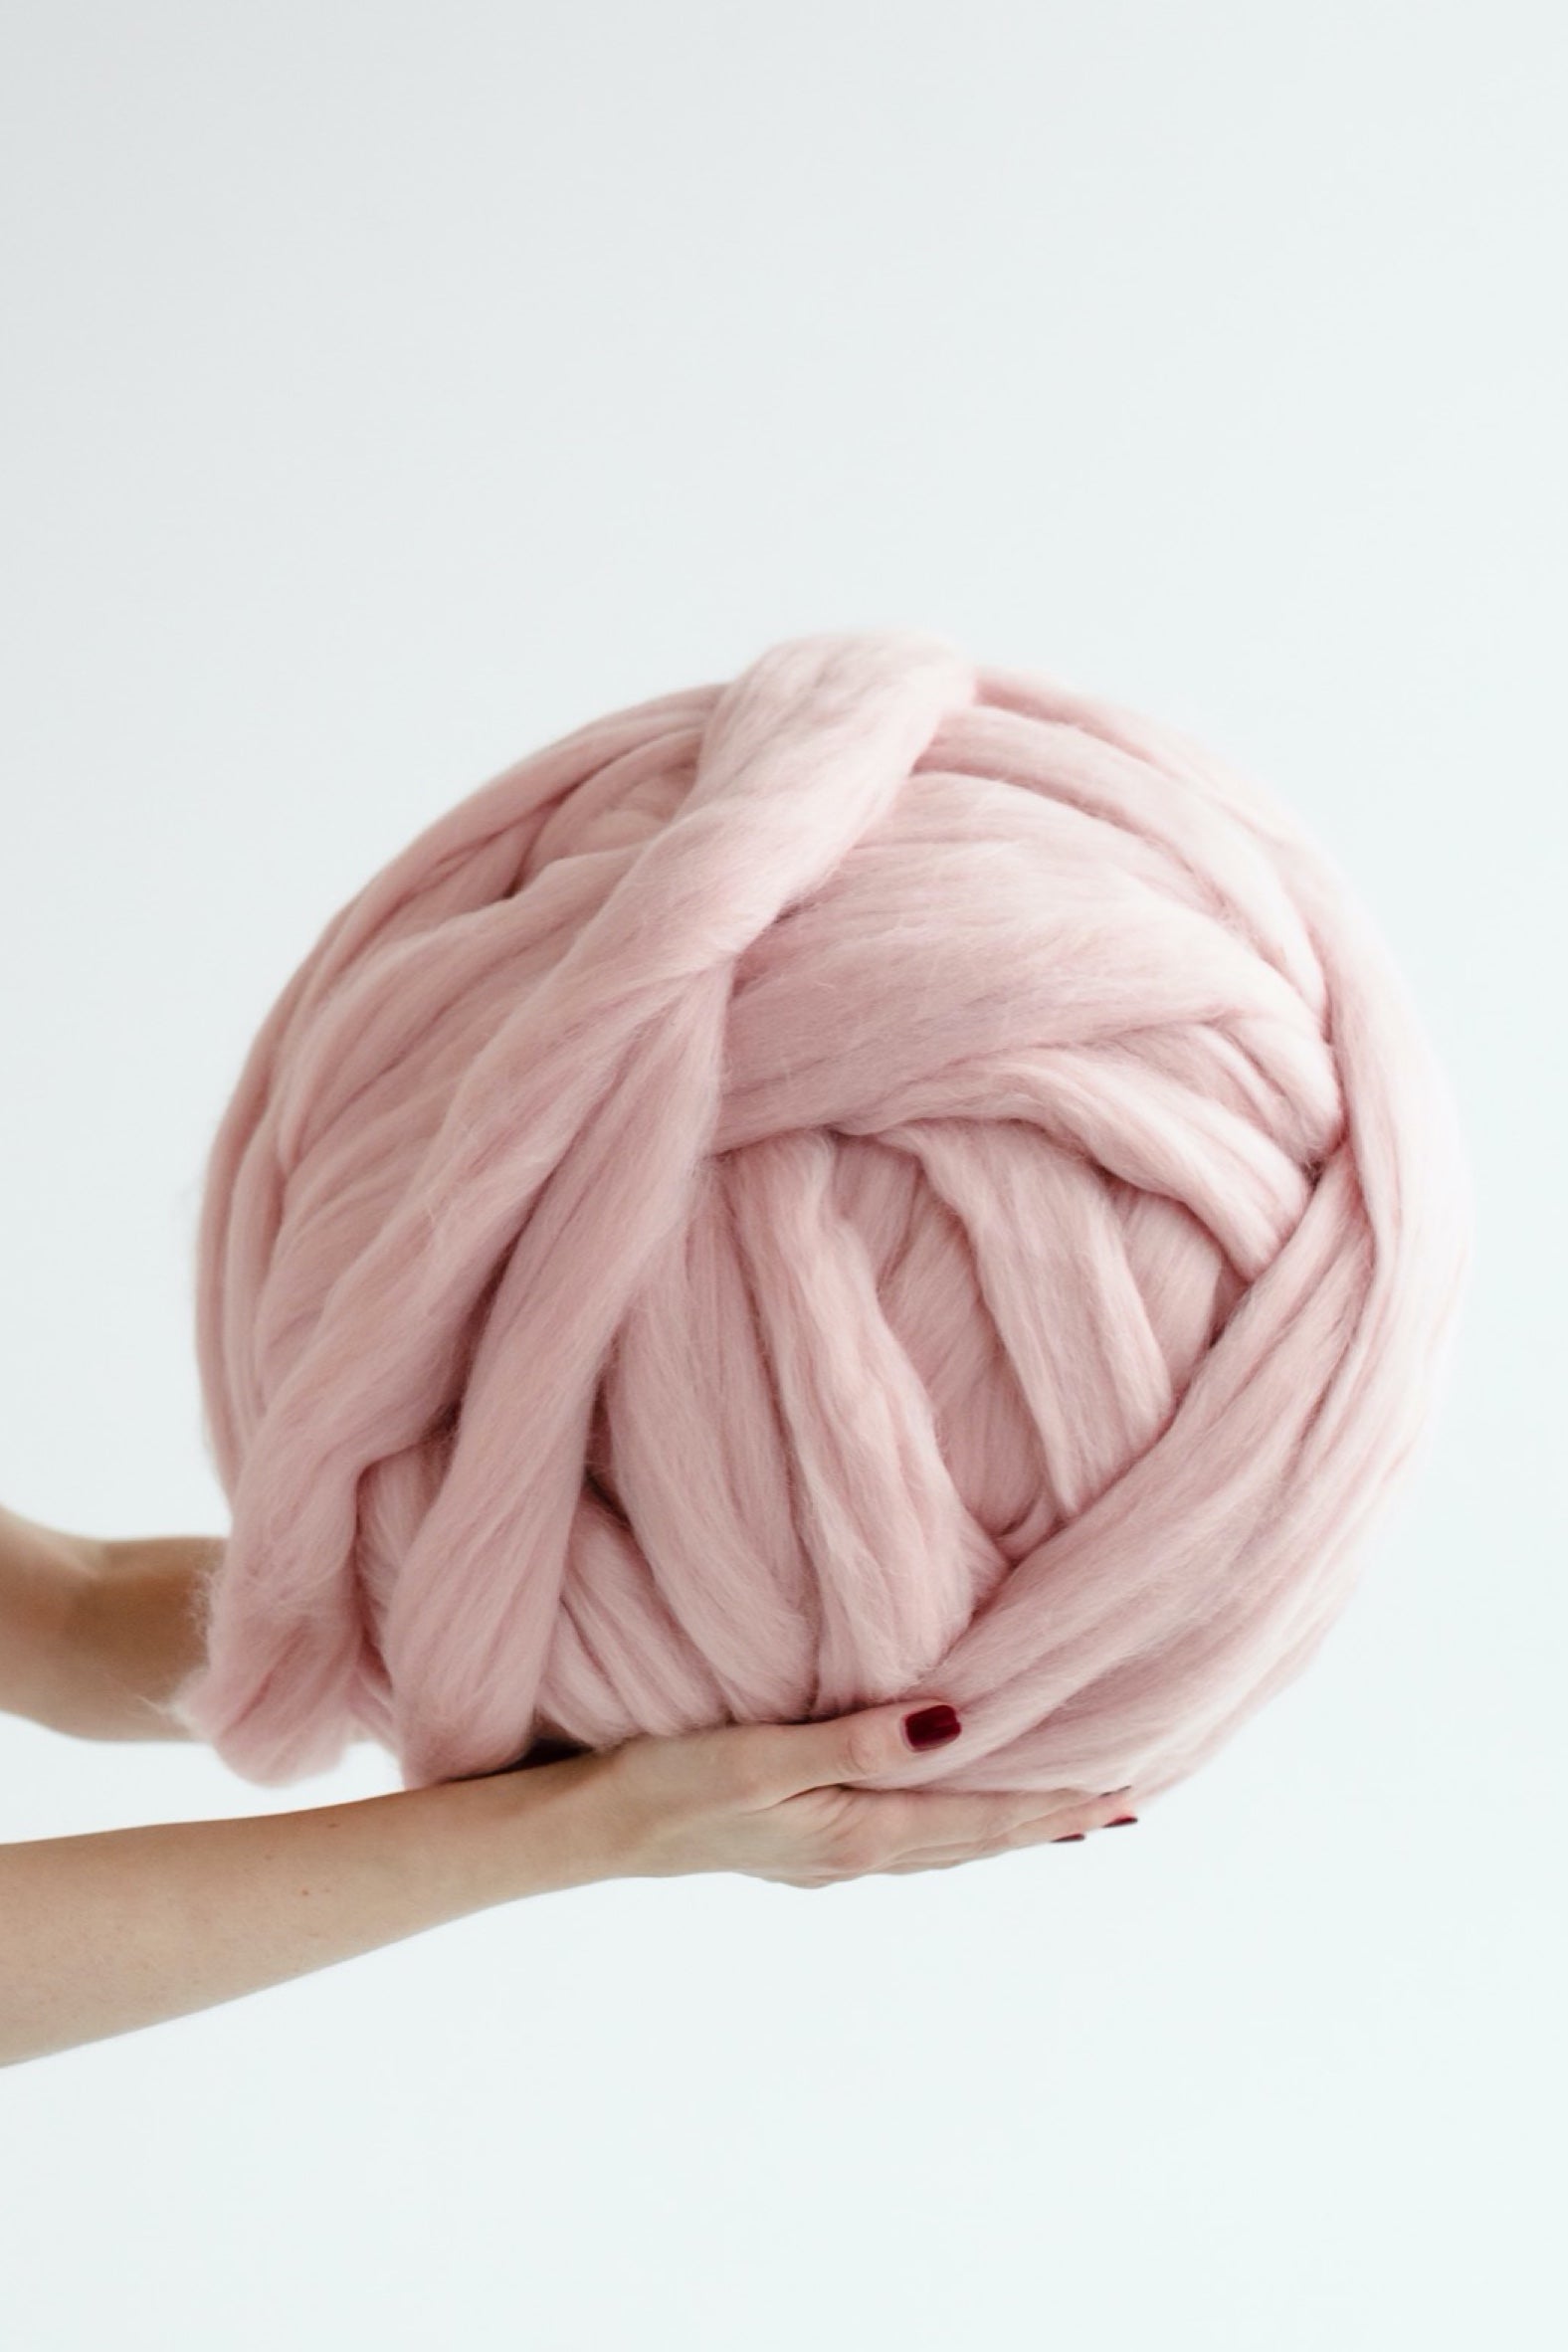 Merino Wool Bulky Yarn Super Chunky Knit Roving Yarn Felted Light Pink Yarn  Crochet Yarn Tapestry Yarn 